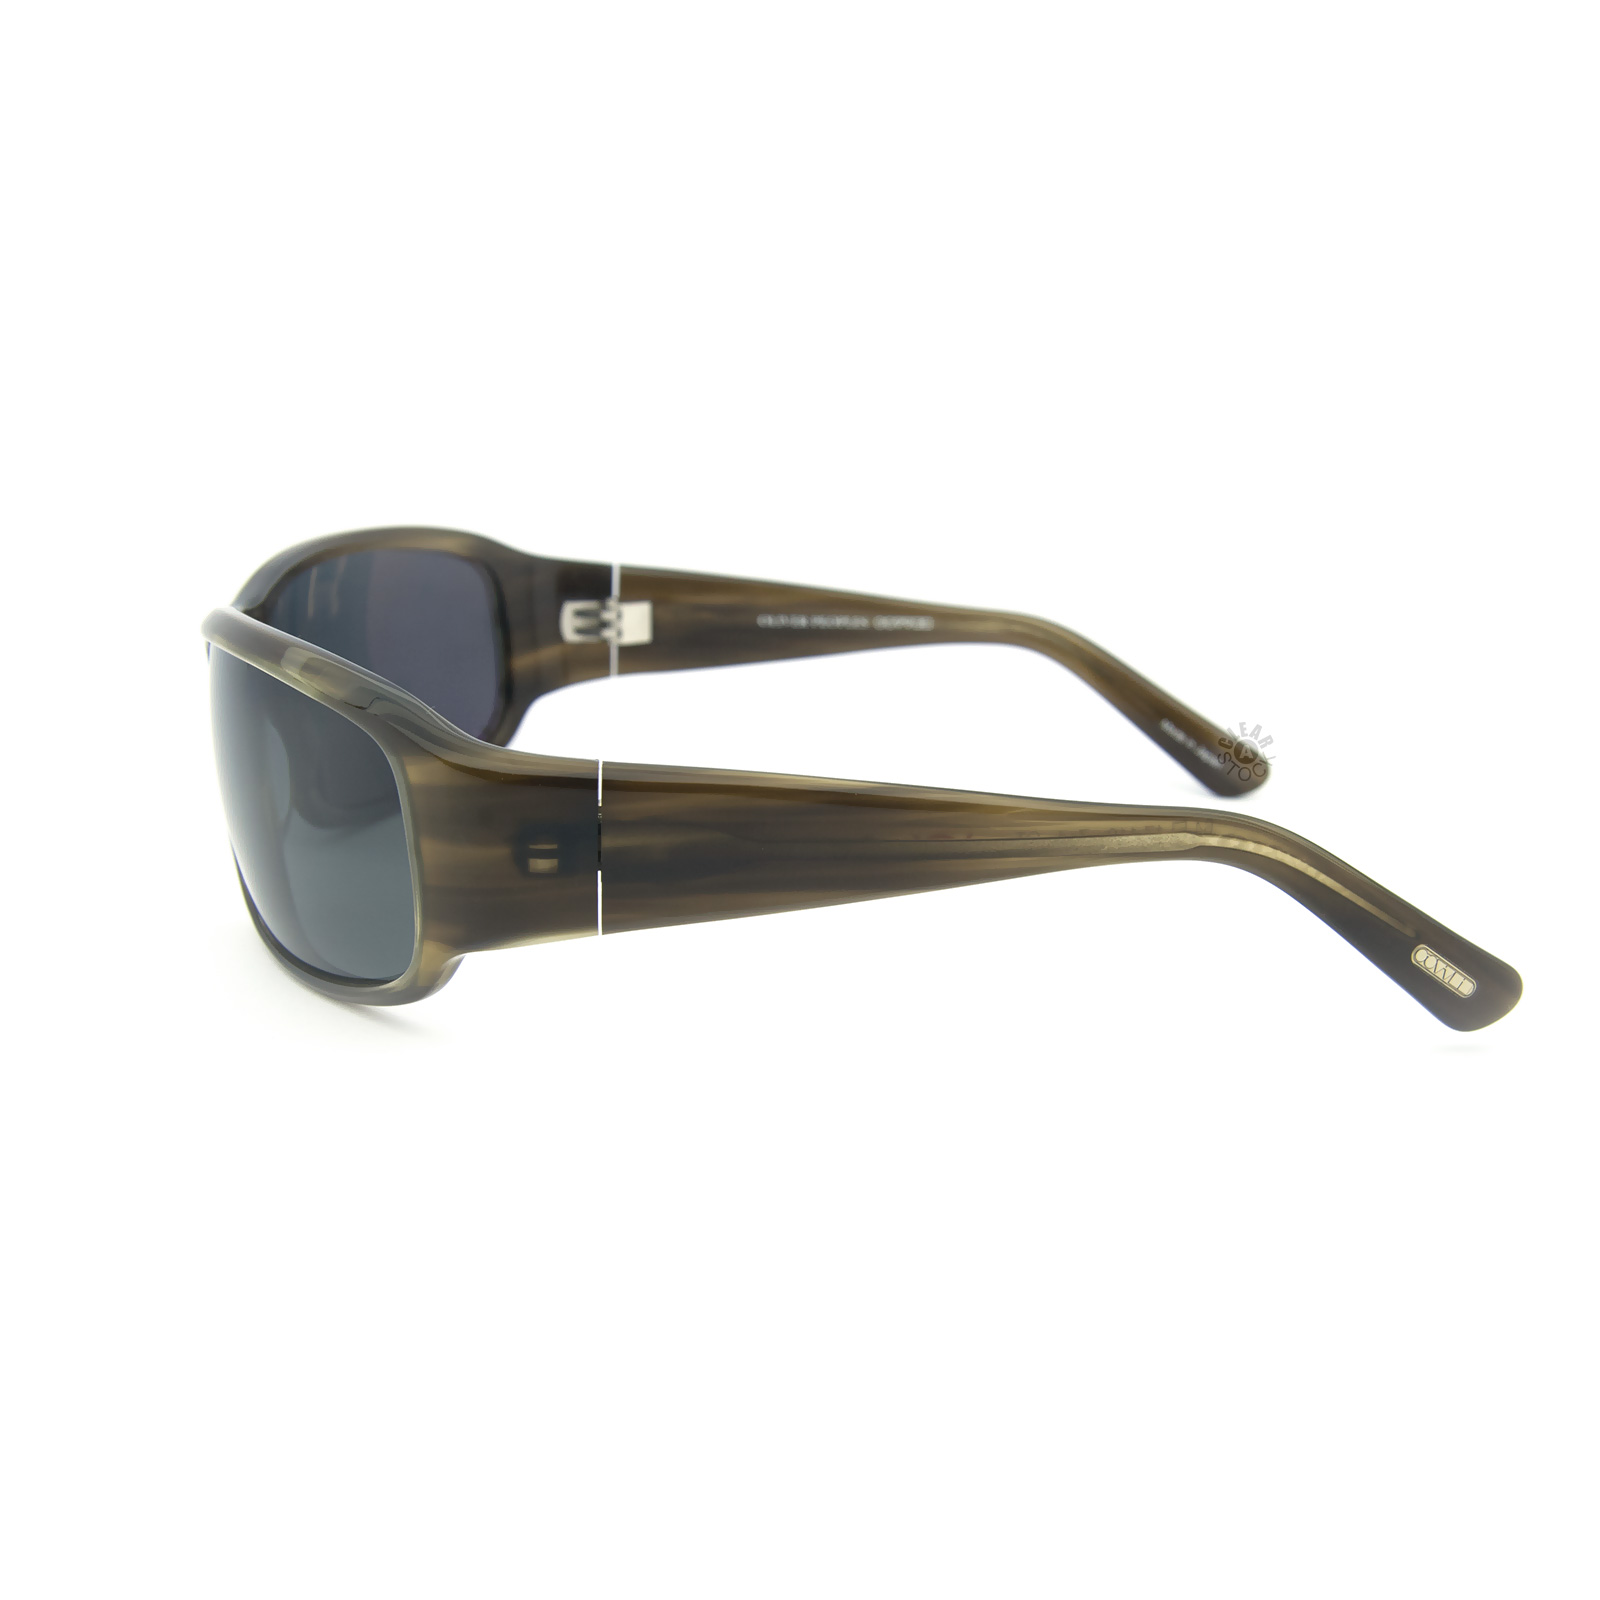 Oliver Peoples Zed OT VFX Polarized Sunglasses 64x17-110